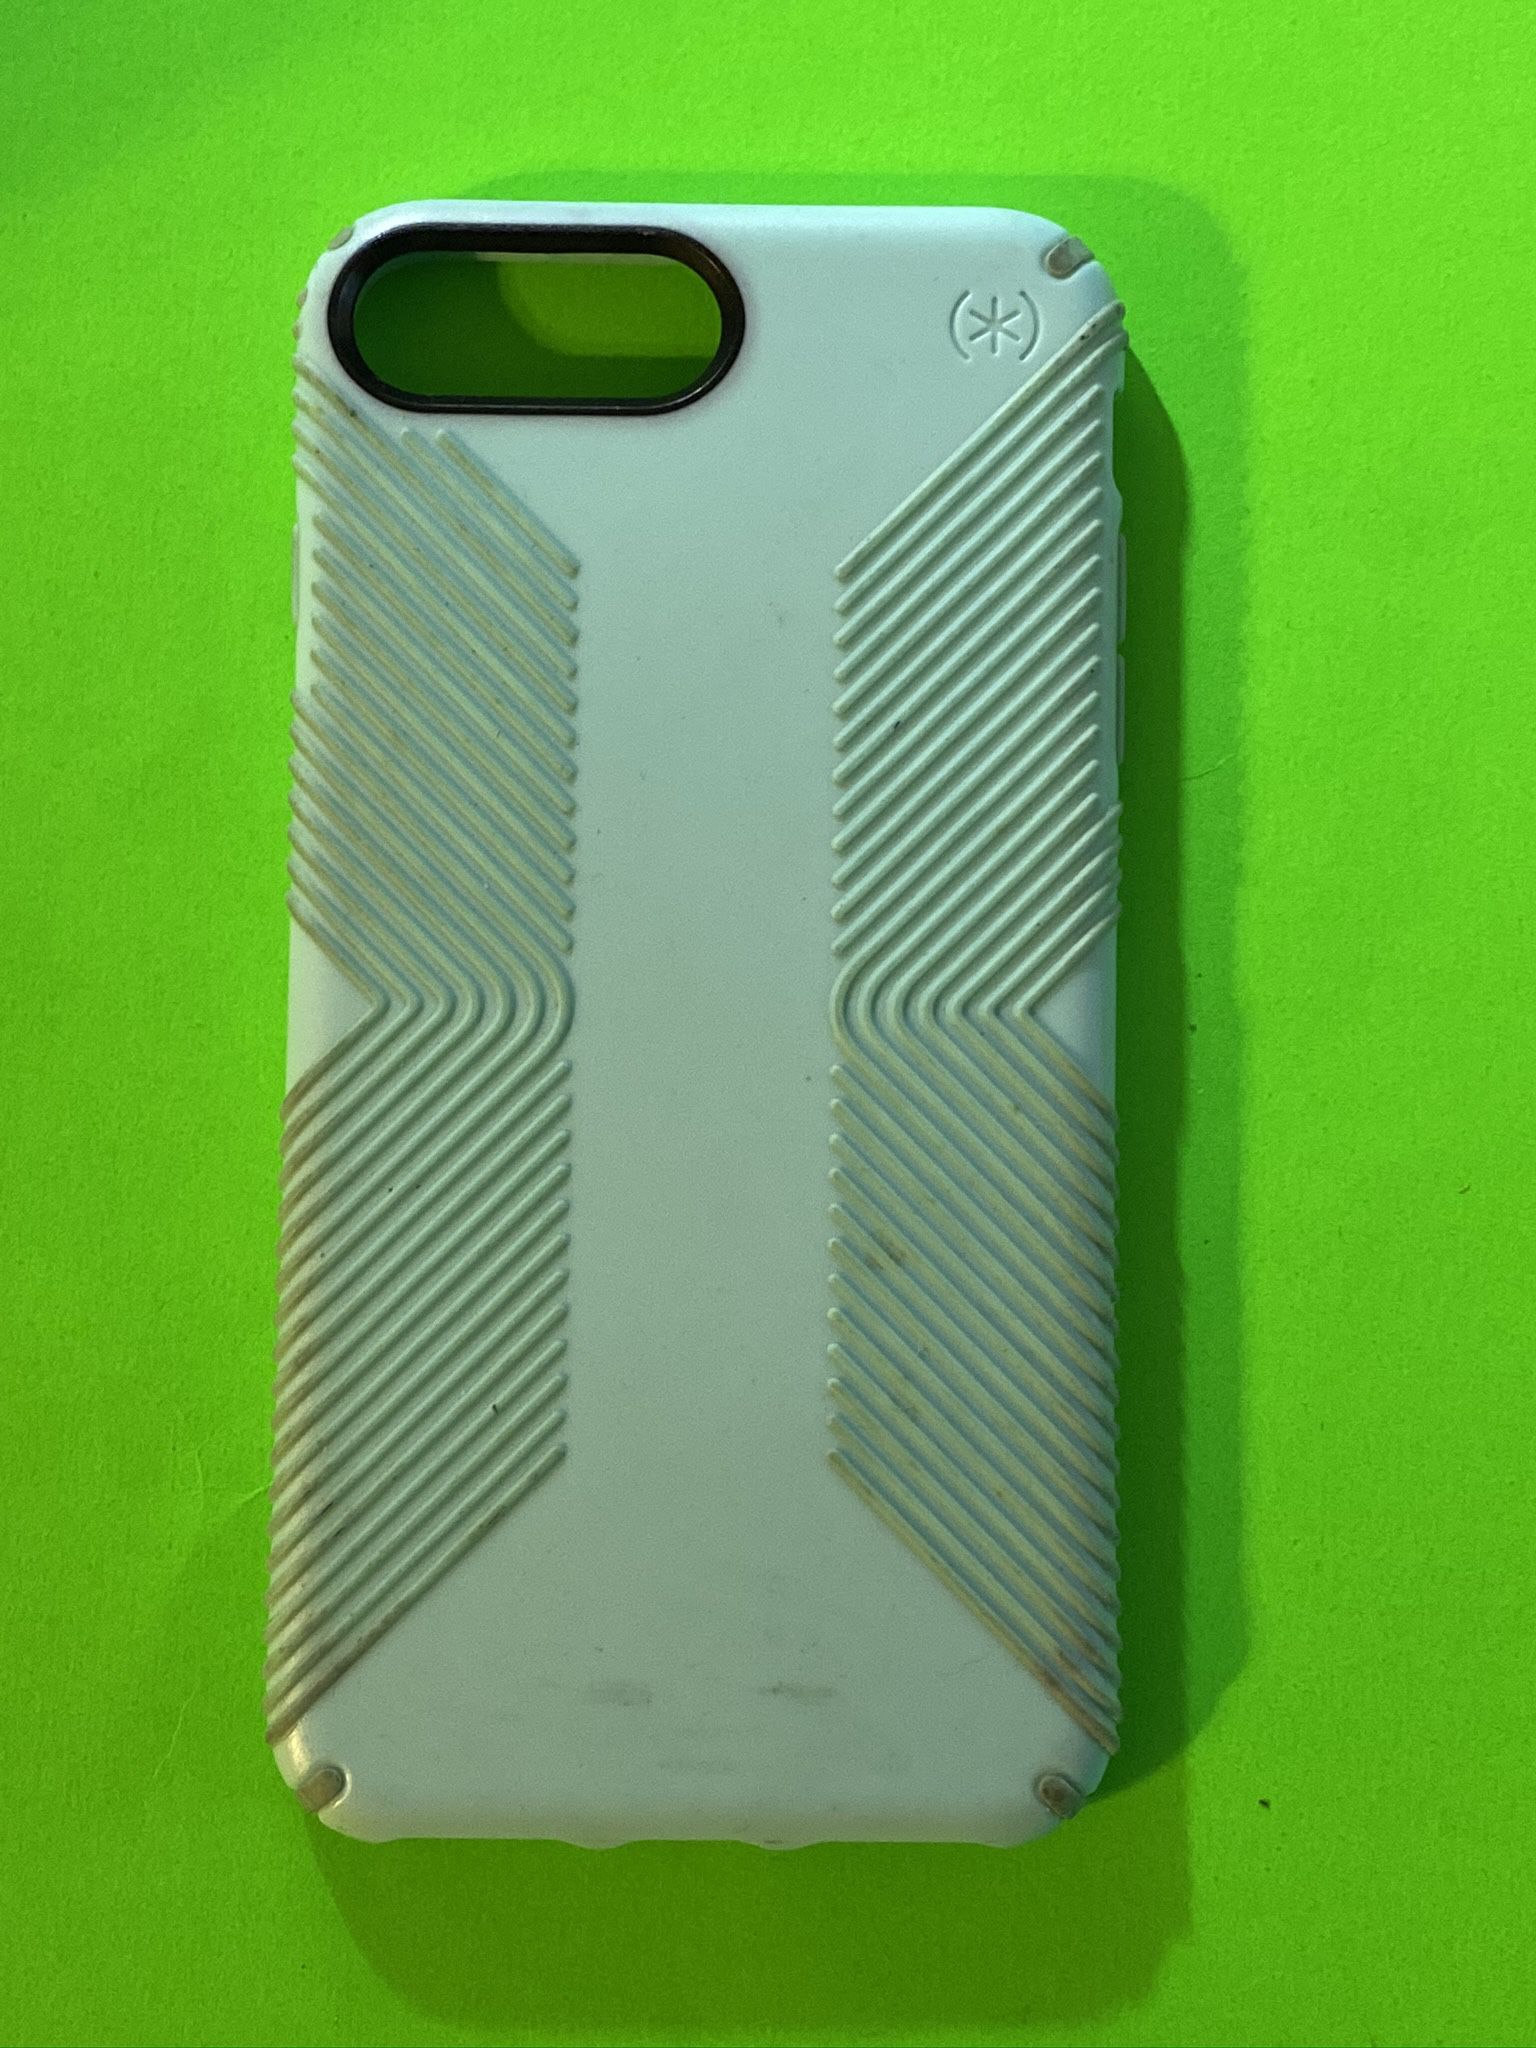 IPhone 6/7/8 Plus Speck Case Green